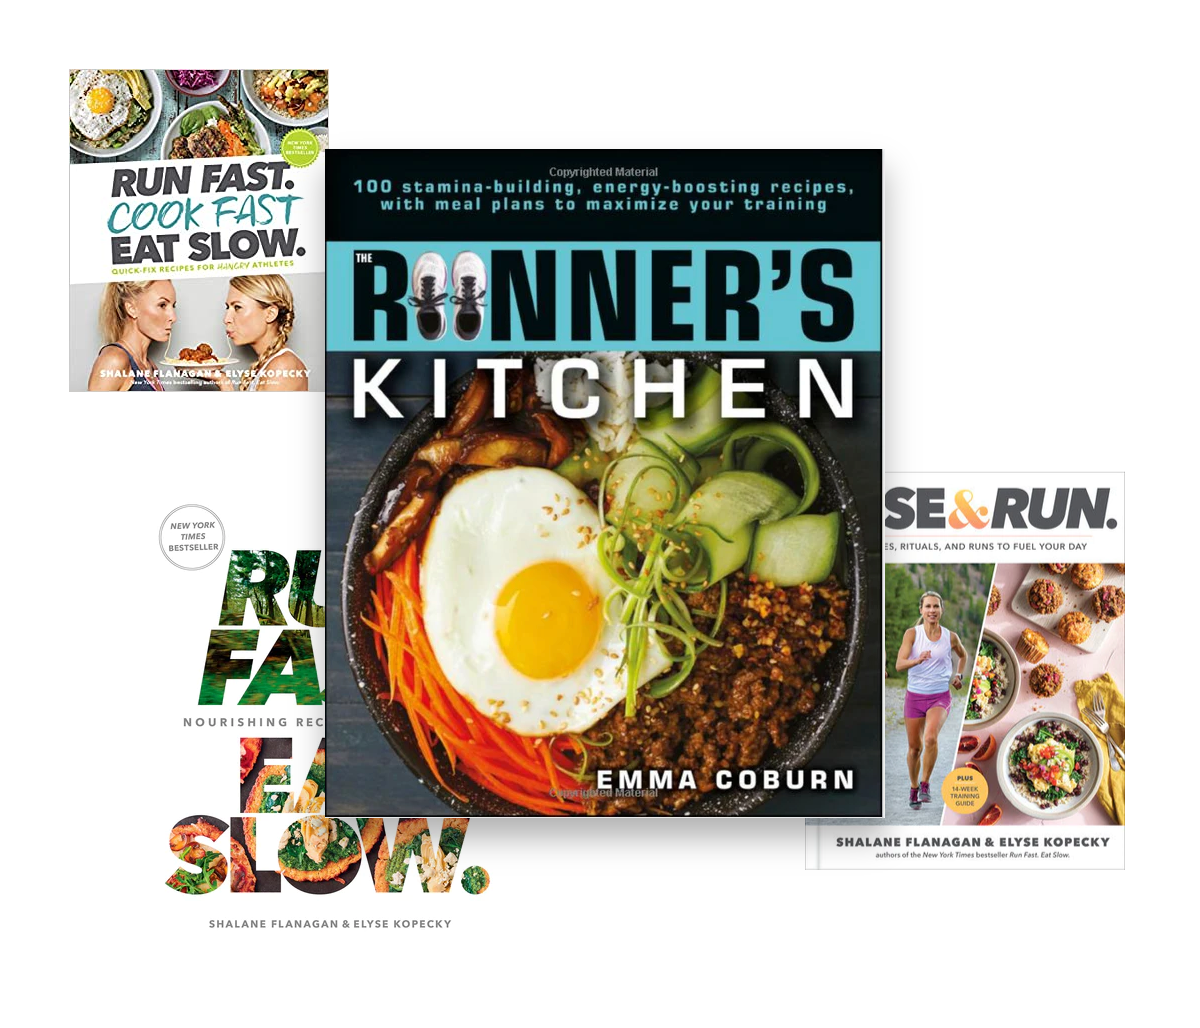 4 different cookbooks, runners kitchen, run fast eat slow, rise & run, and run fast cook fast eat slow